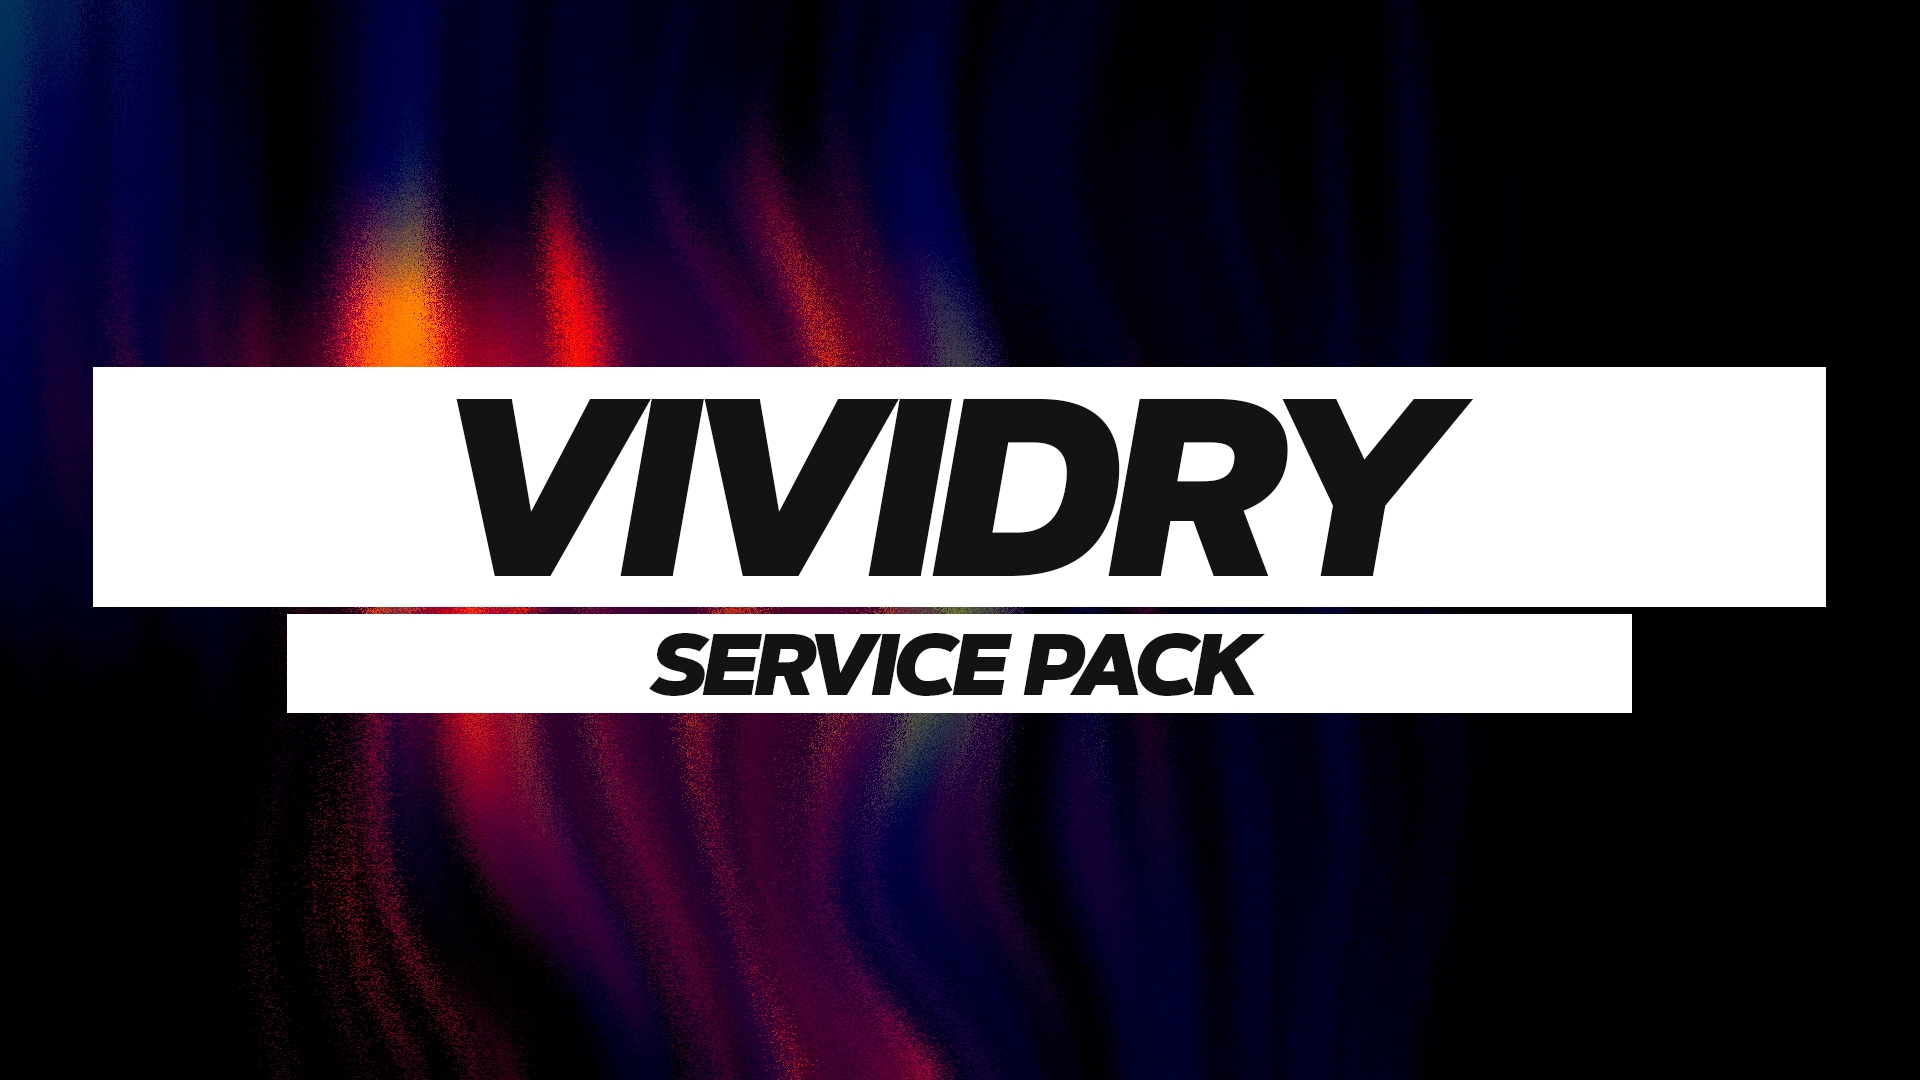 Vividry Service Pack